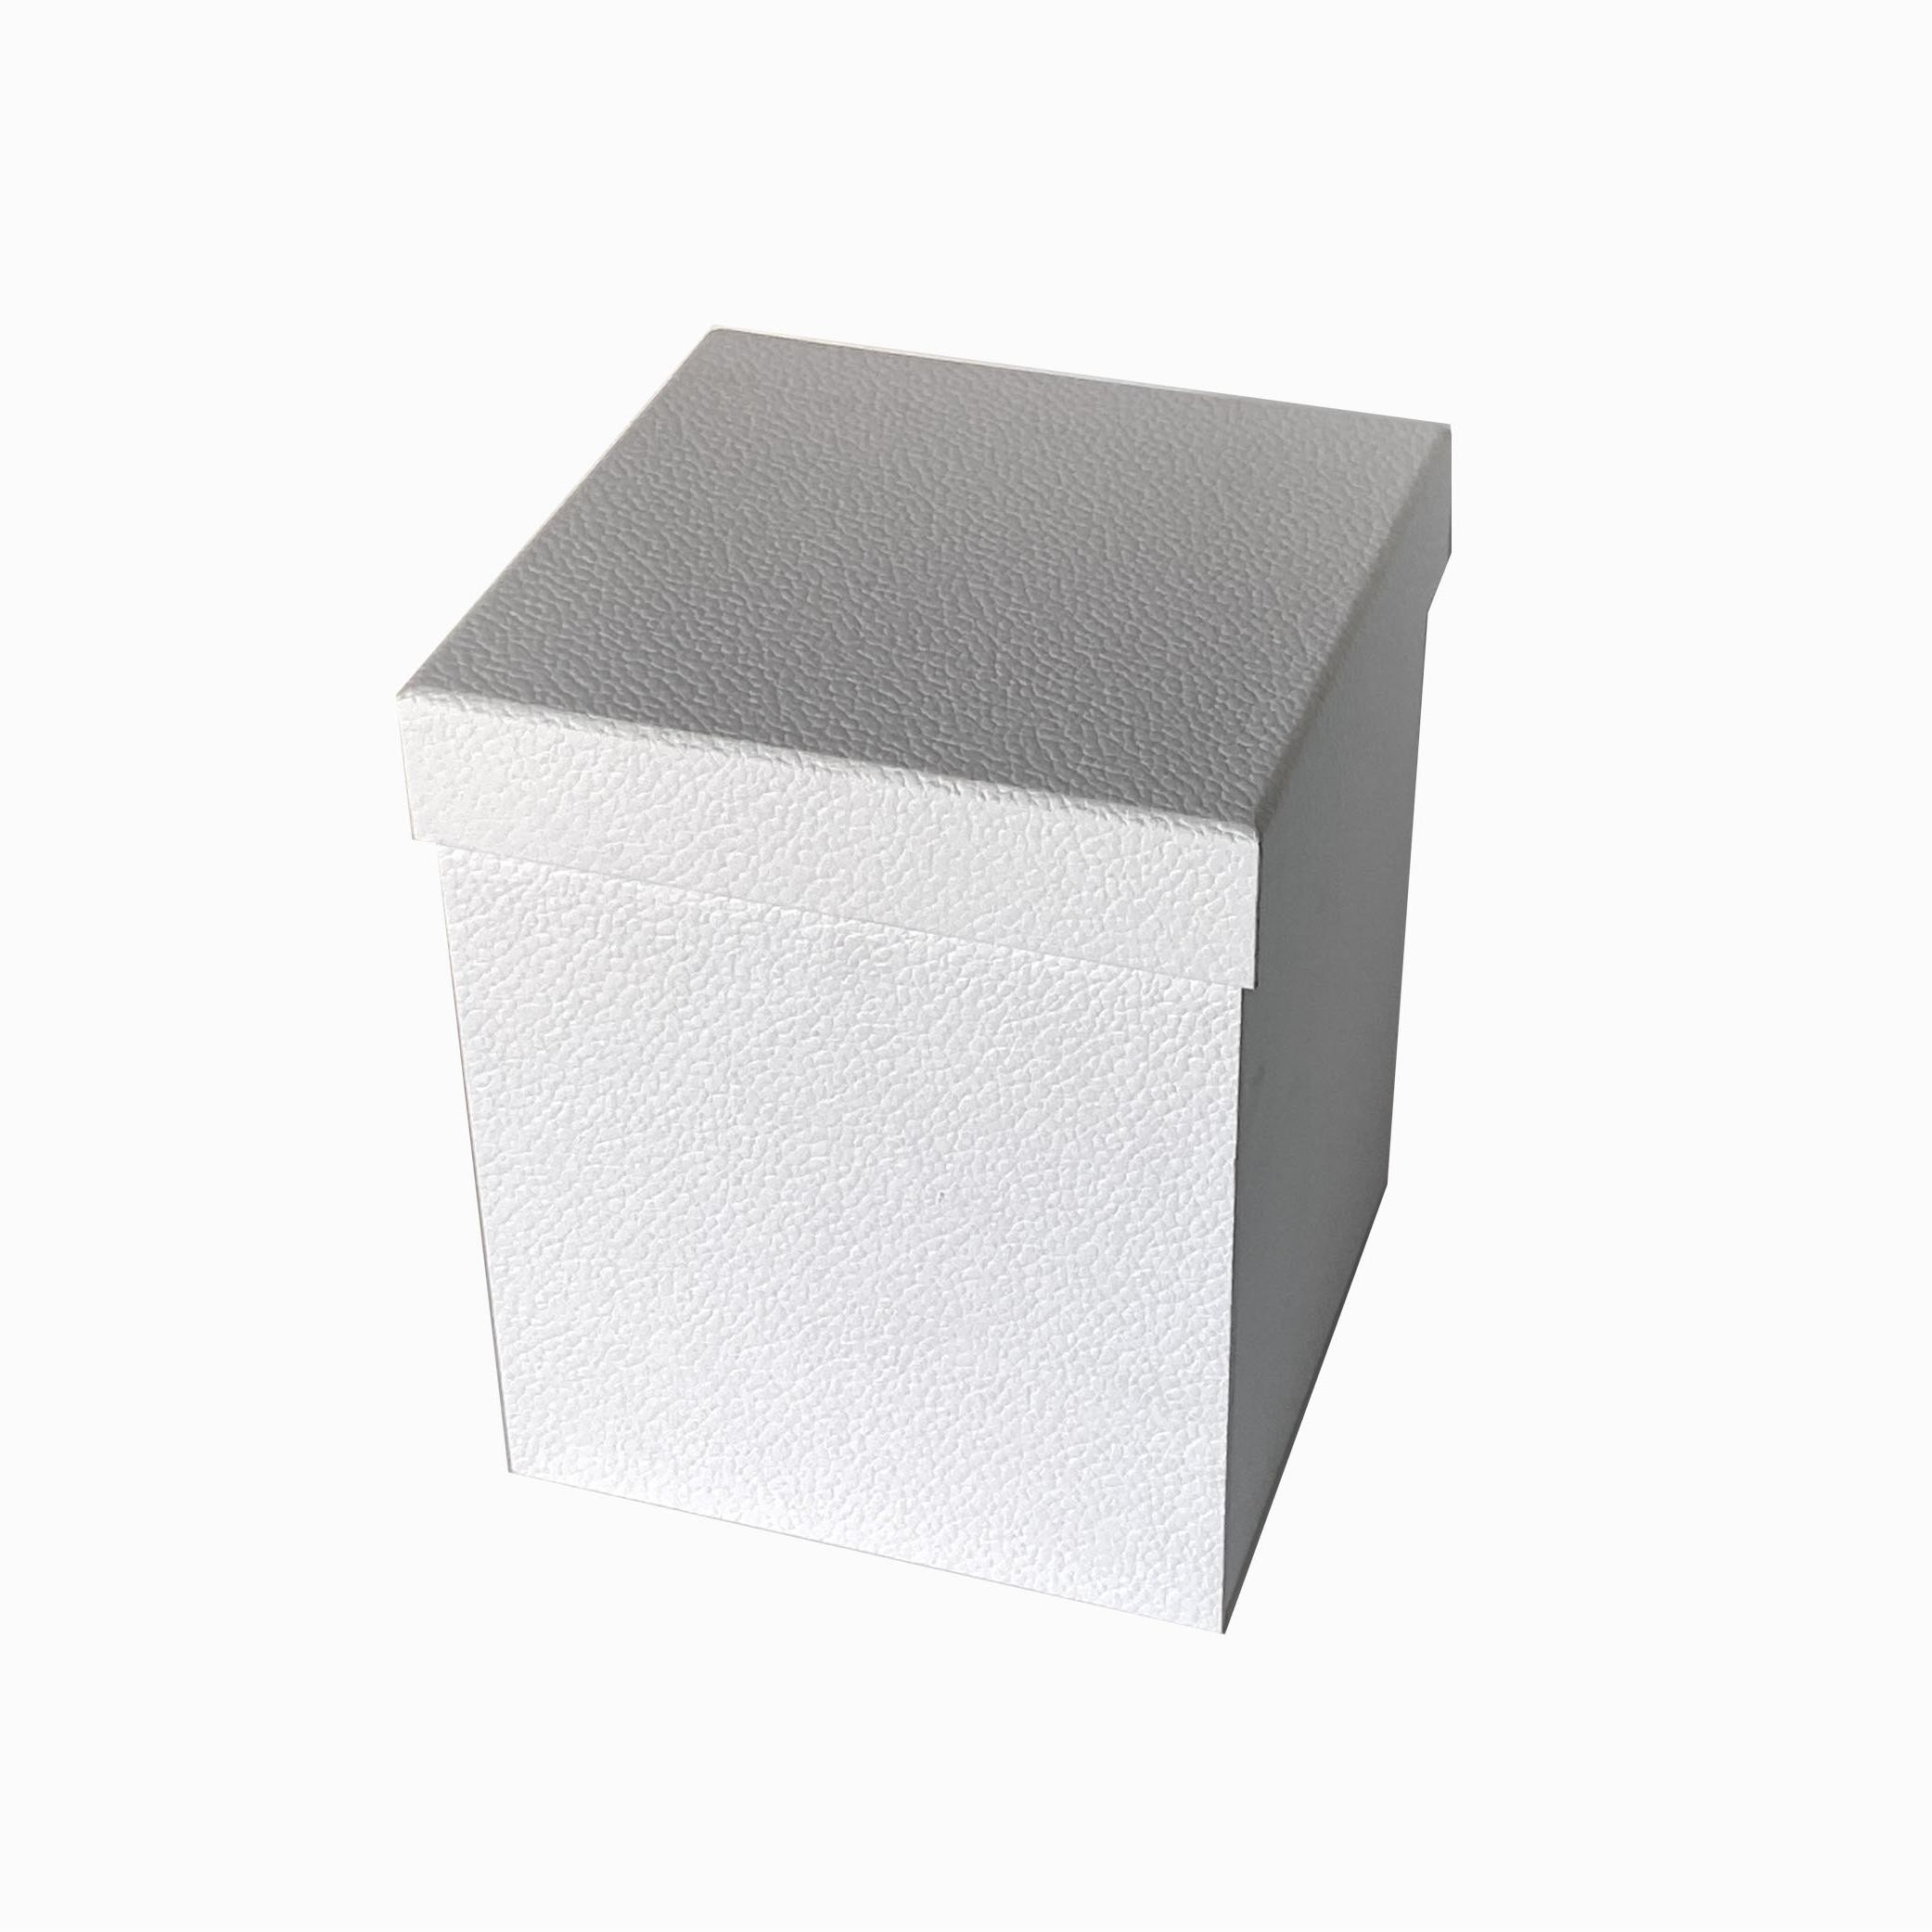 Advanced Water Ball Box  Luxury handmade packaging box